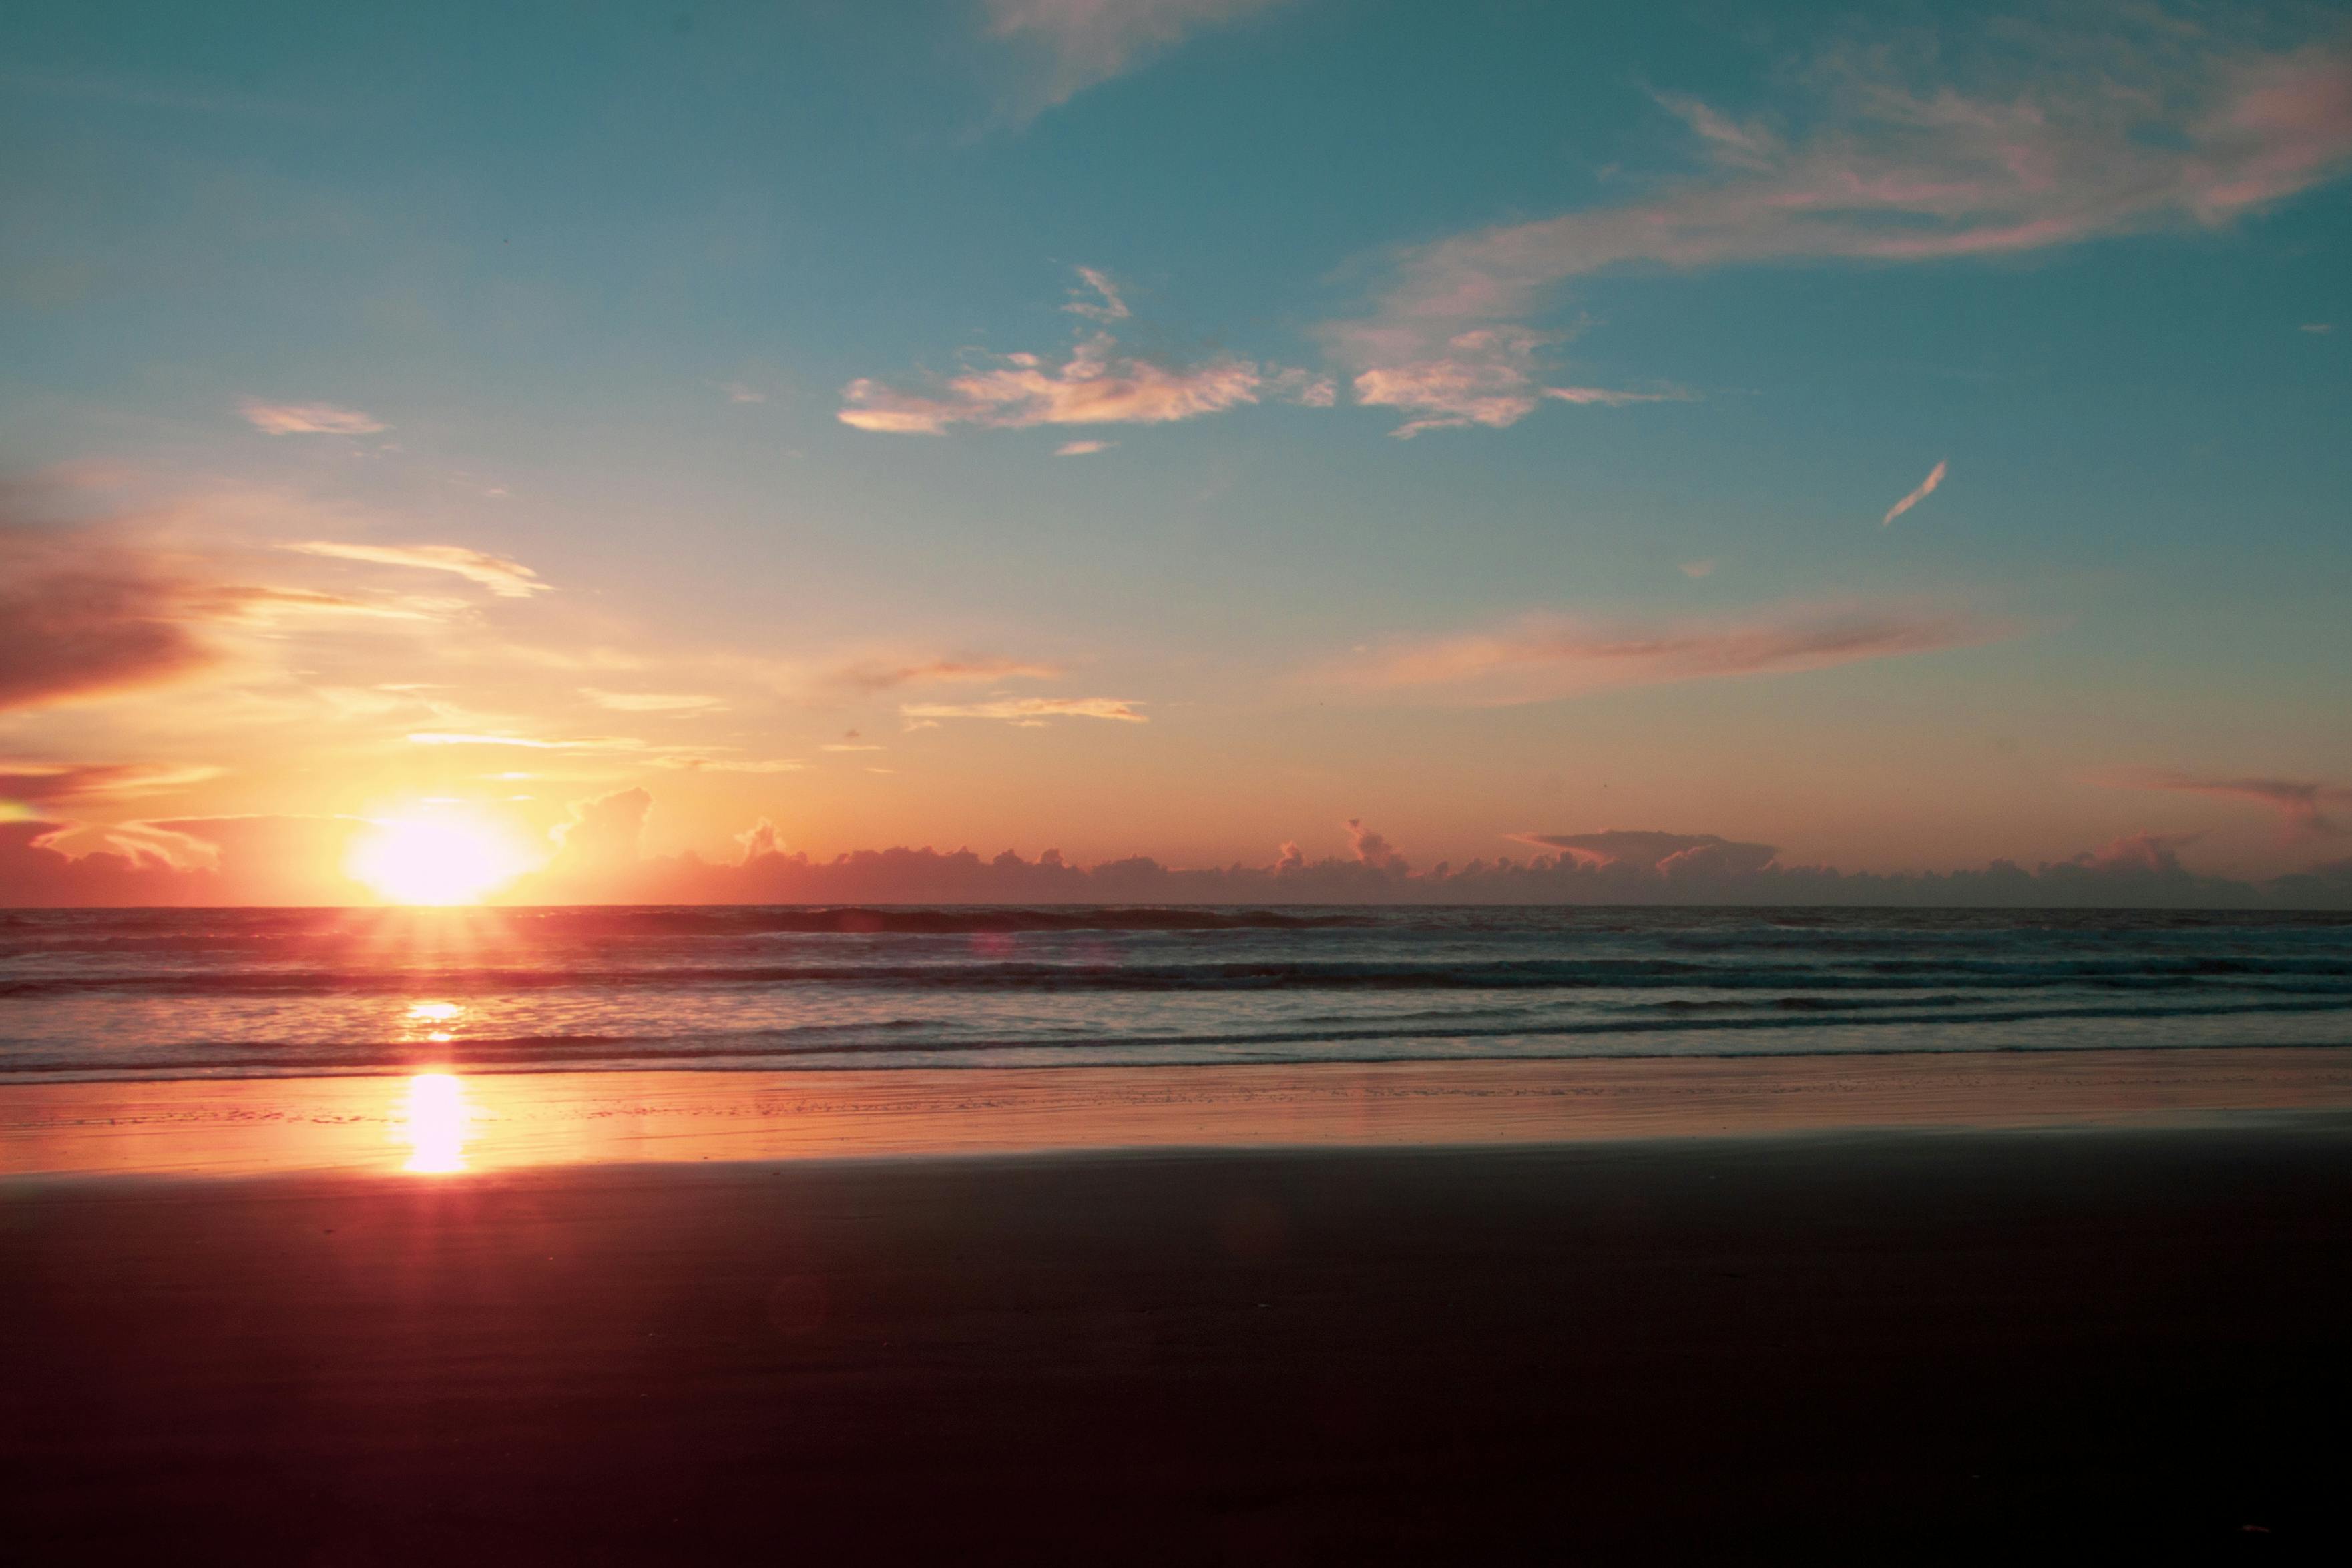 sunrise beach background